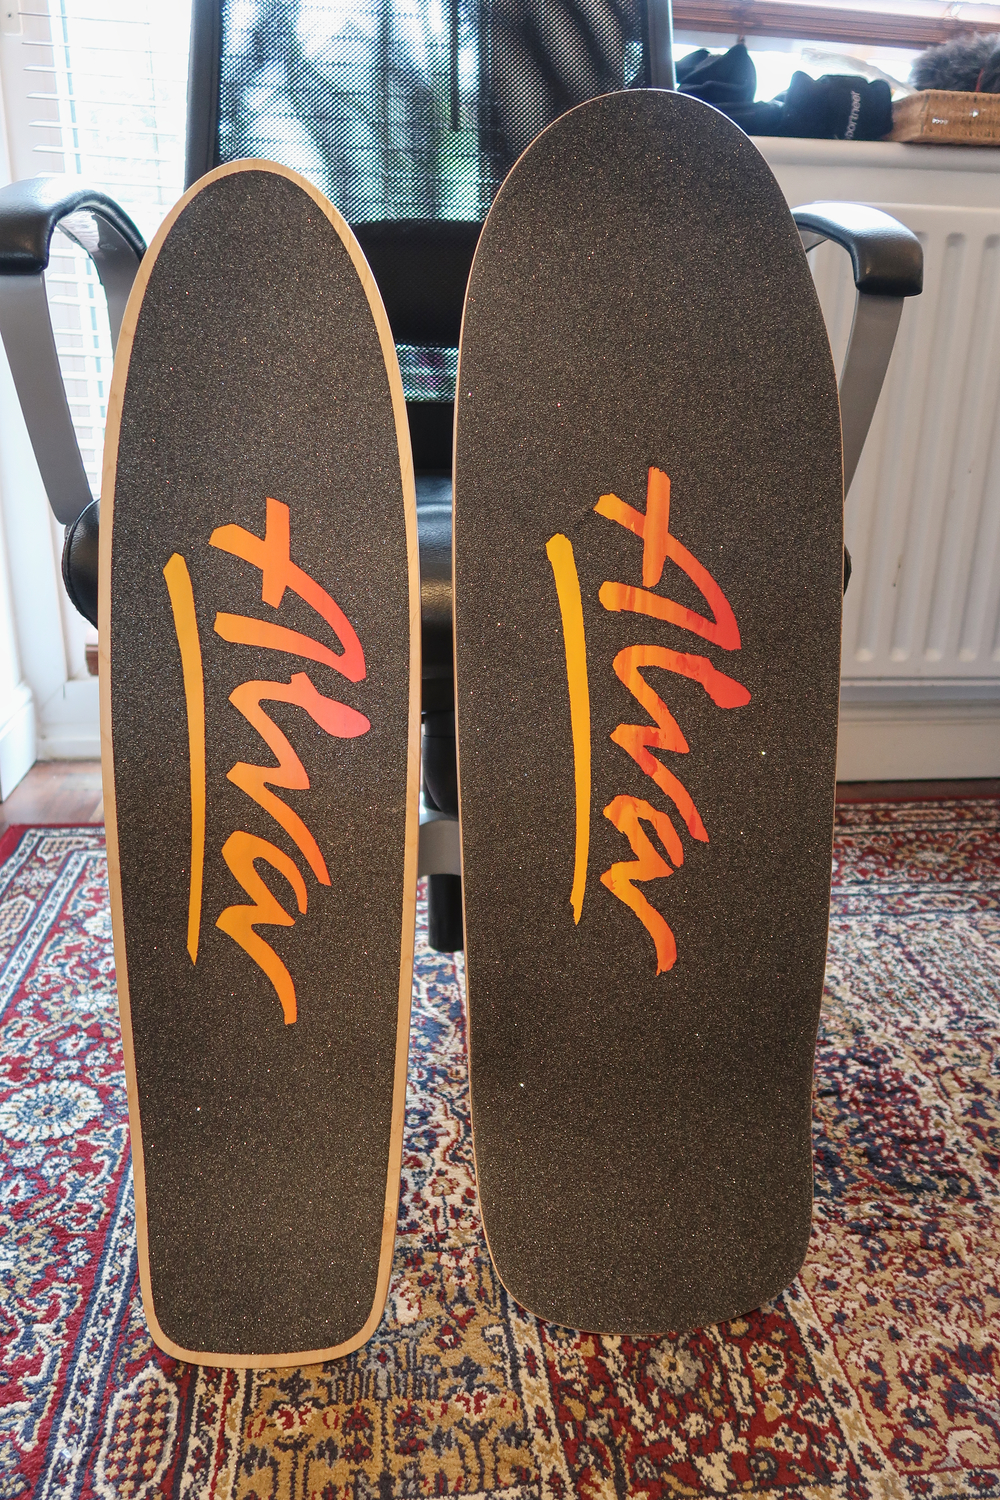 Two Alva skateboard decks